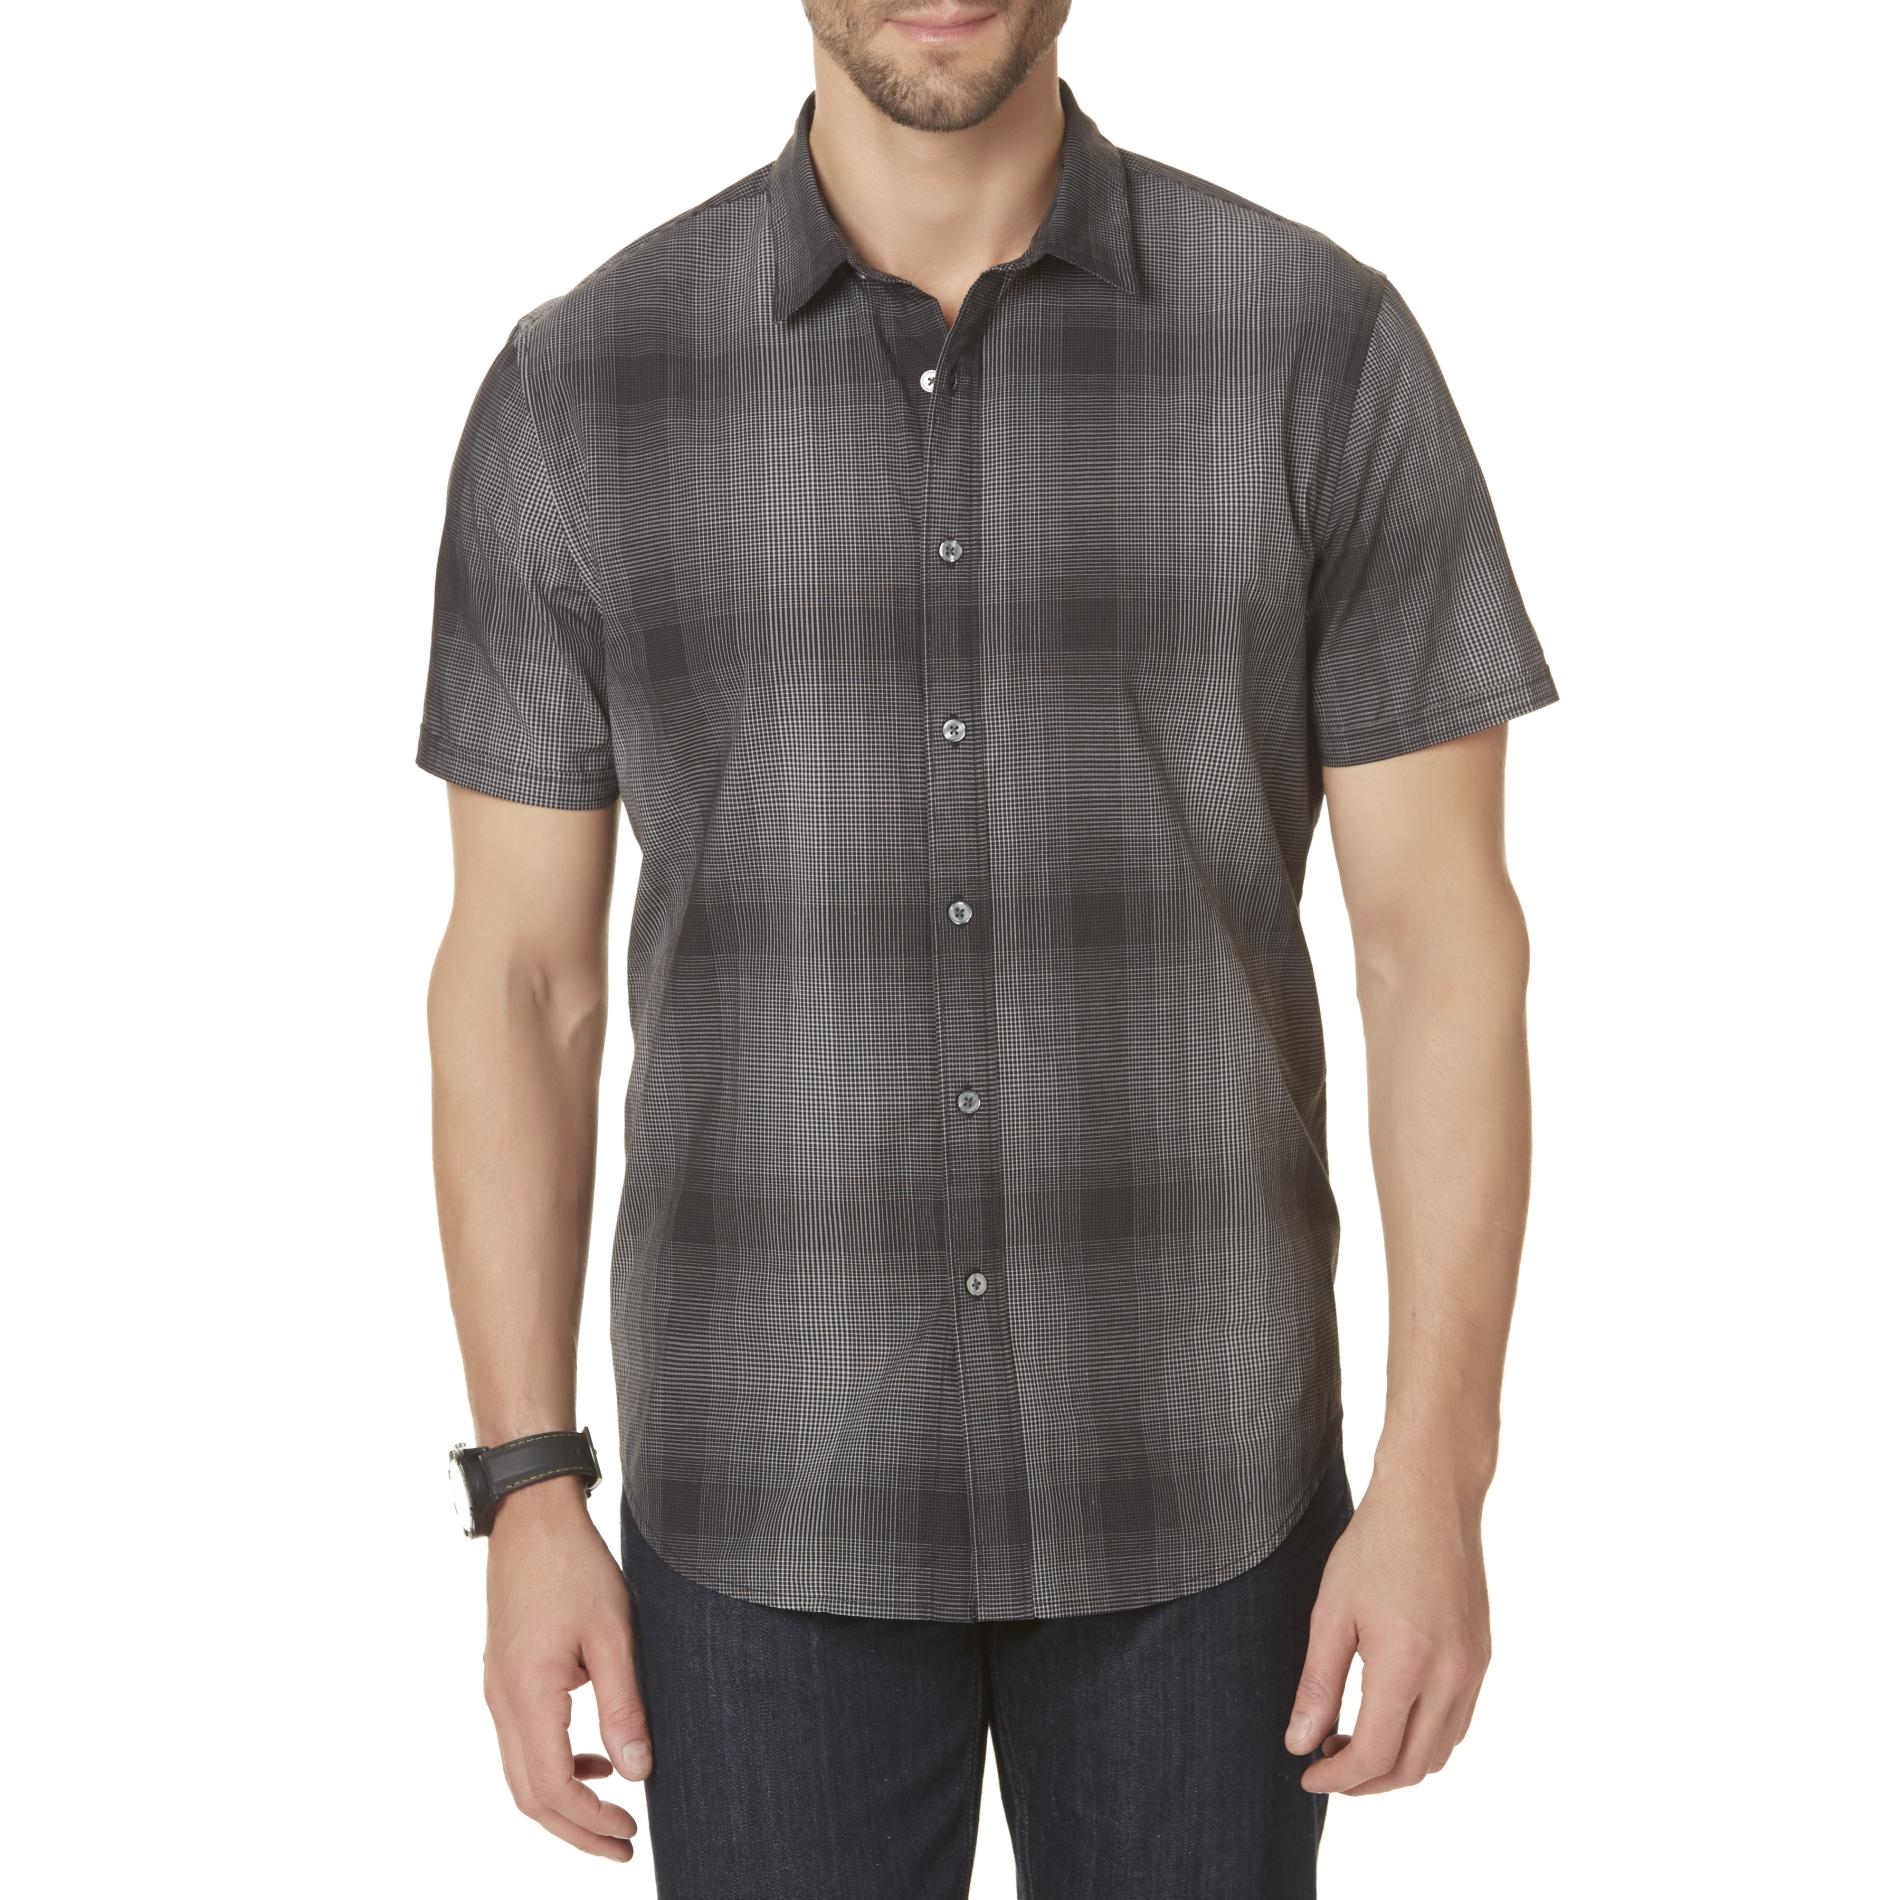 Structure Men's Short-Sleeve Shirt - Plaid